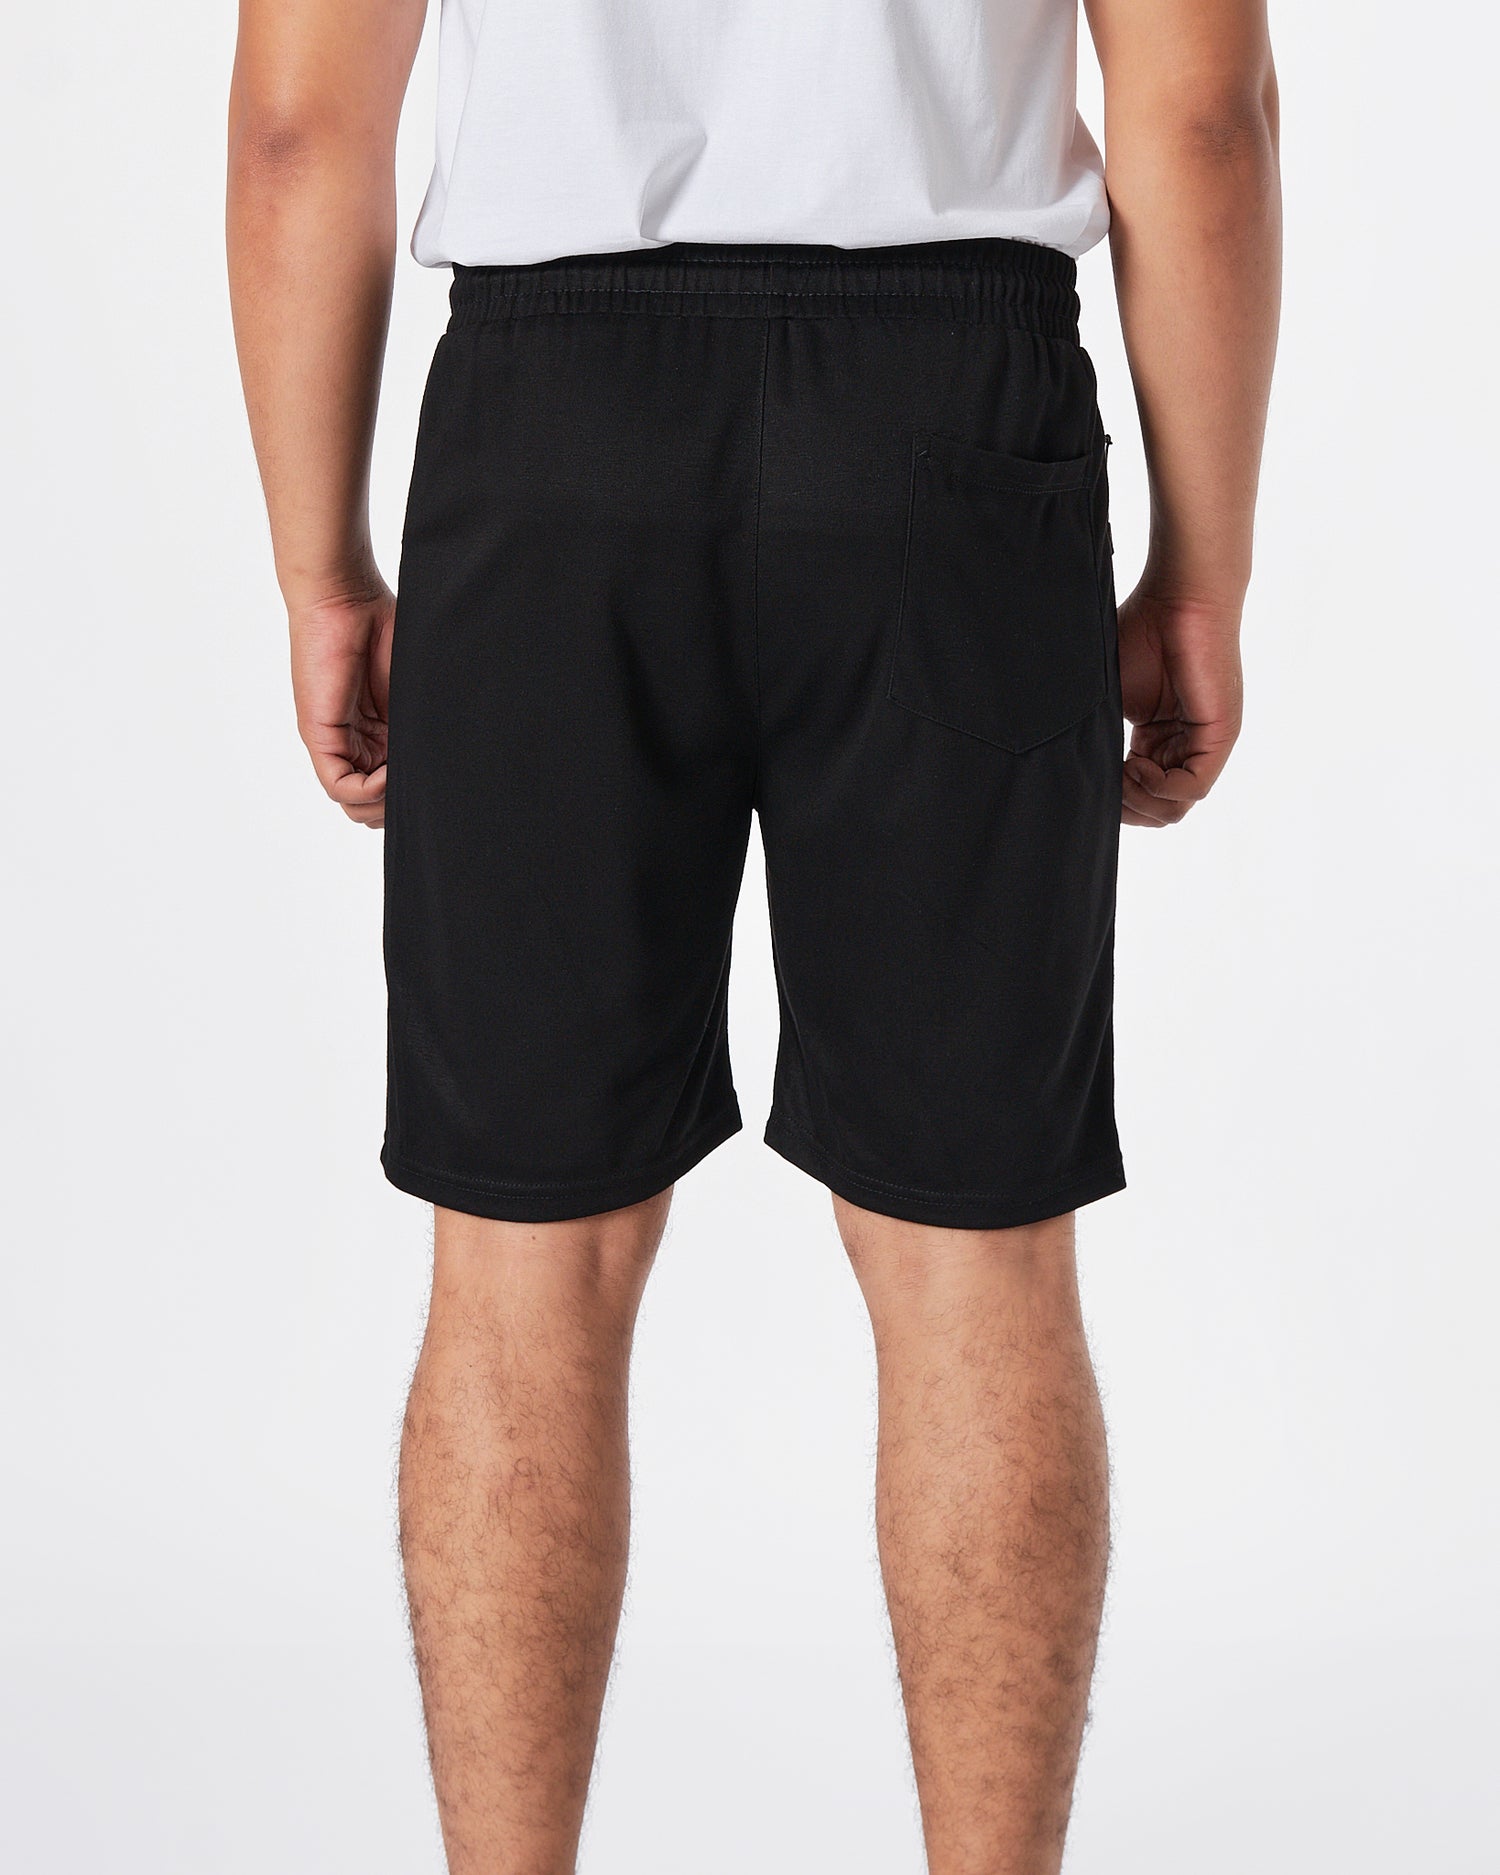 ADI Logo Vertical Printed Men Black Track Shorts 13.90